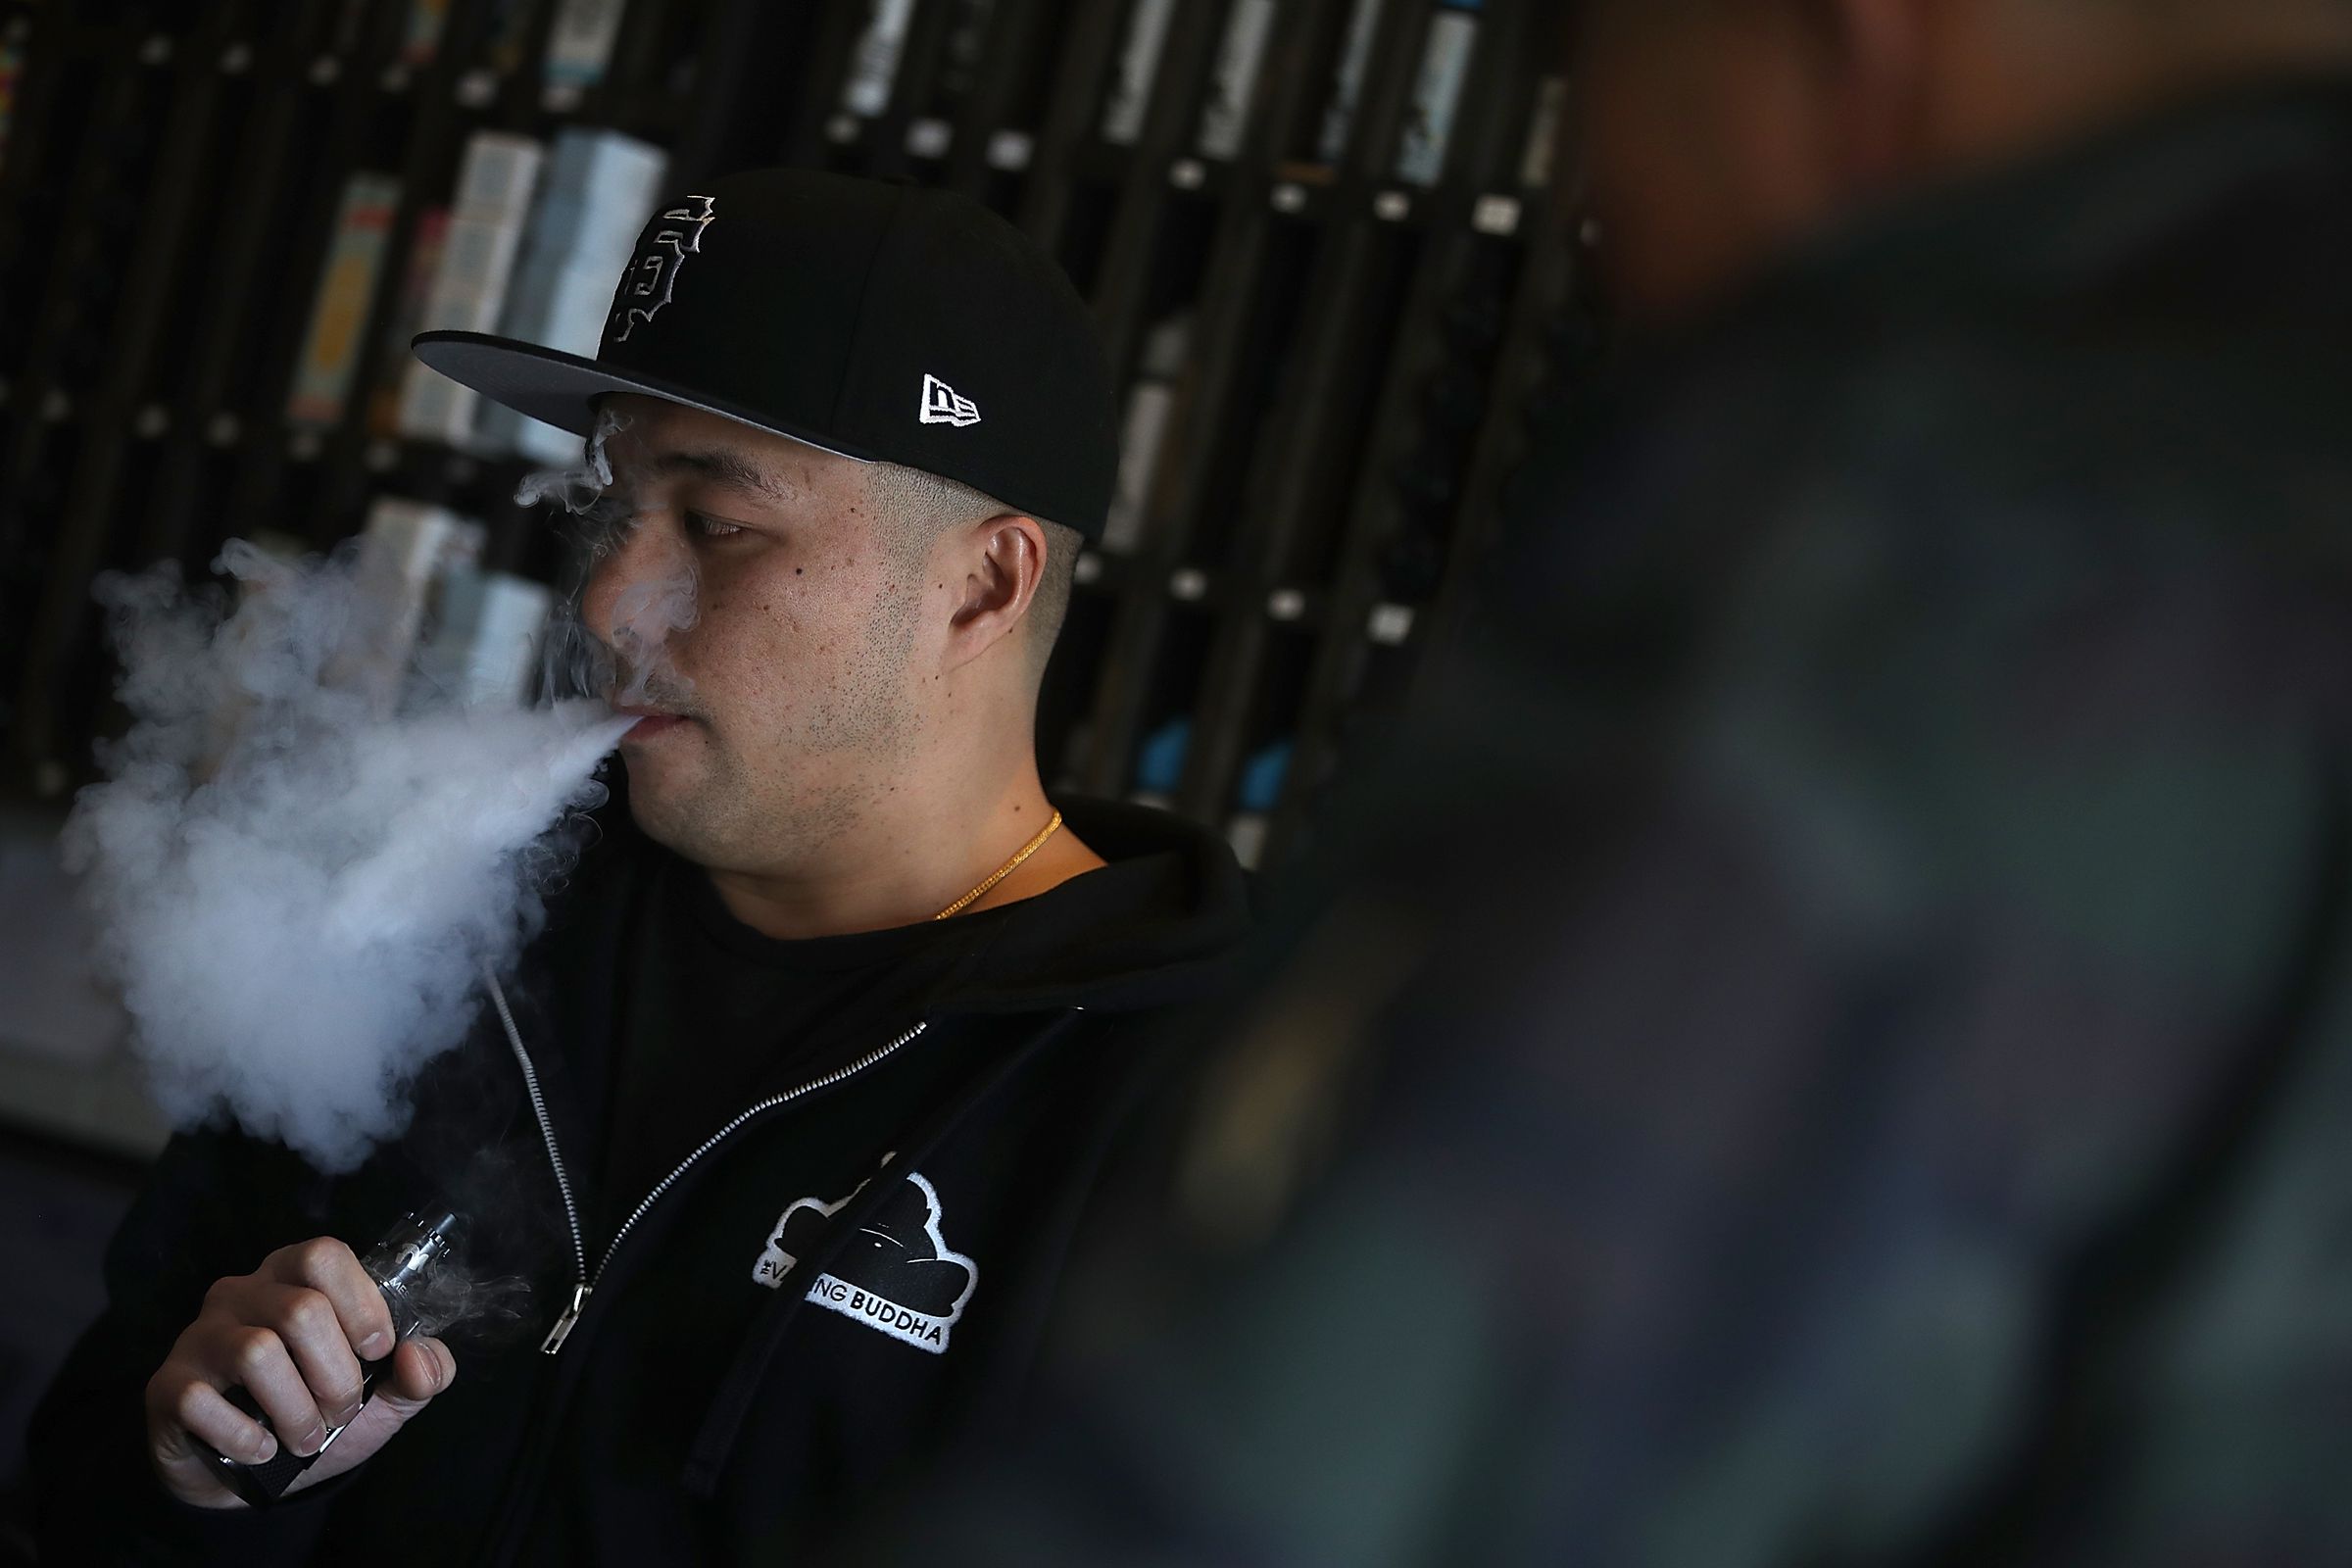 New Study Shows E-Cigarettes Less Dangerous Than Smoking